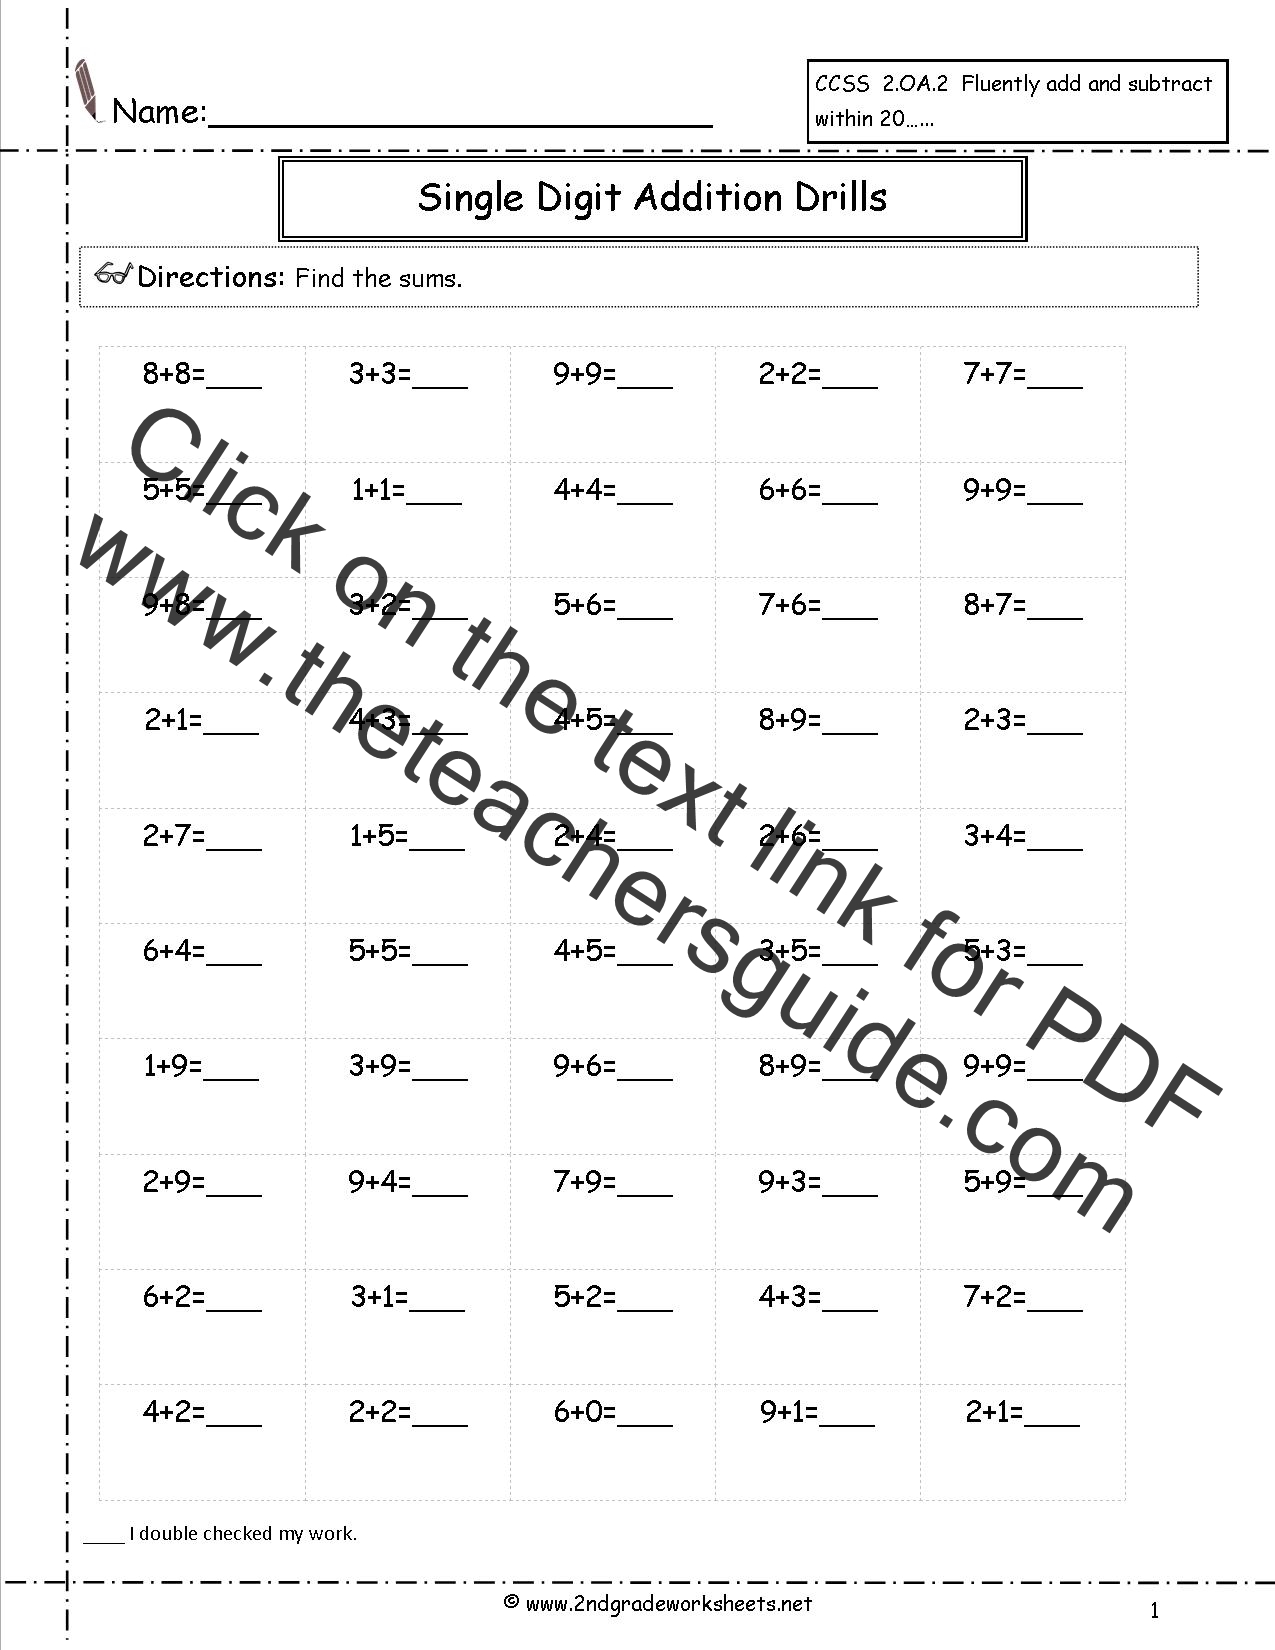 Single Digit Addition Fluency Drills Worksheets